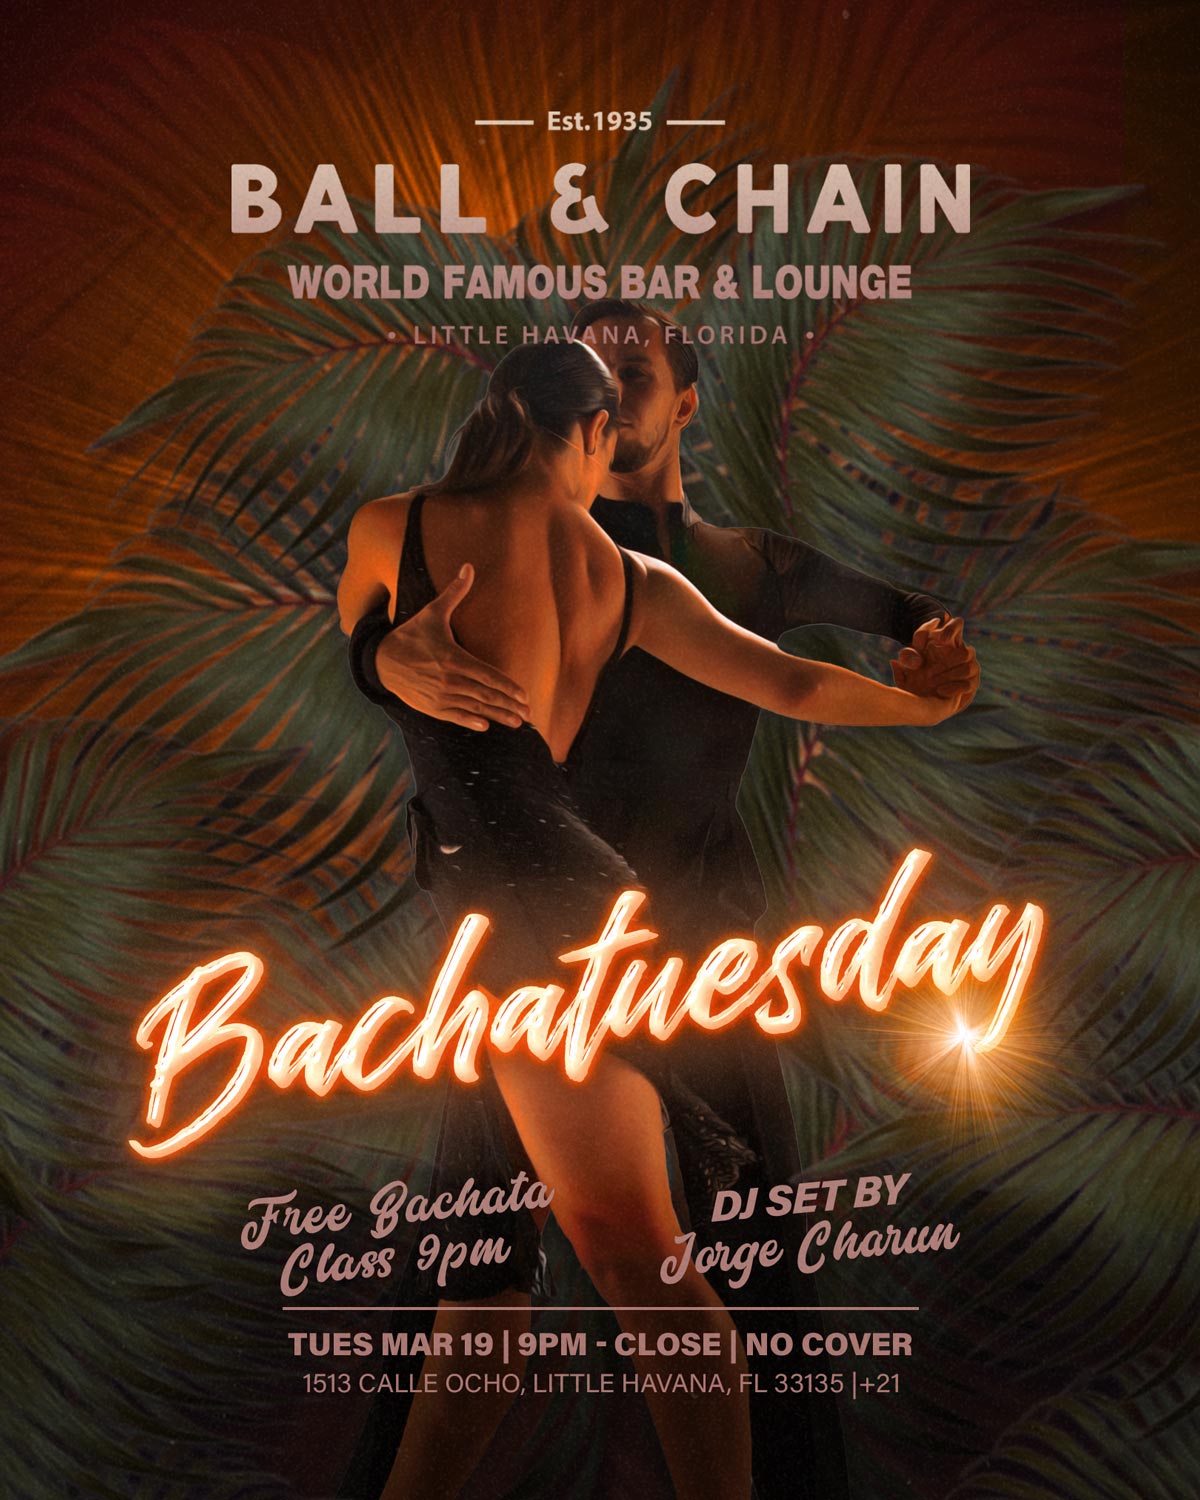 Bachatuesday at Ball & Chain Miami